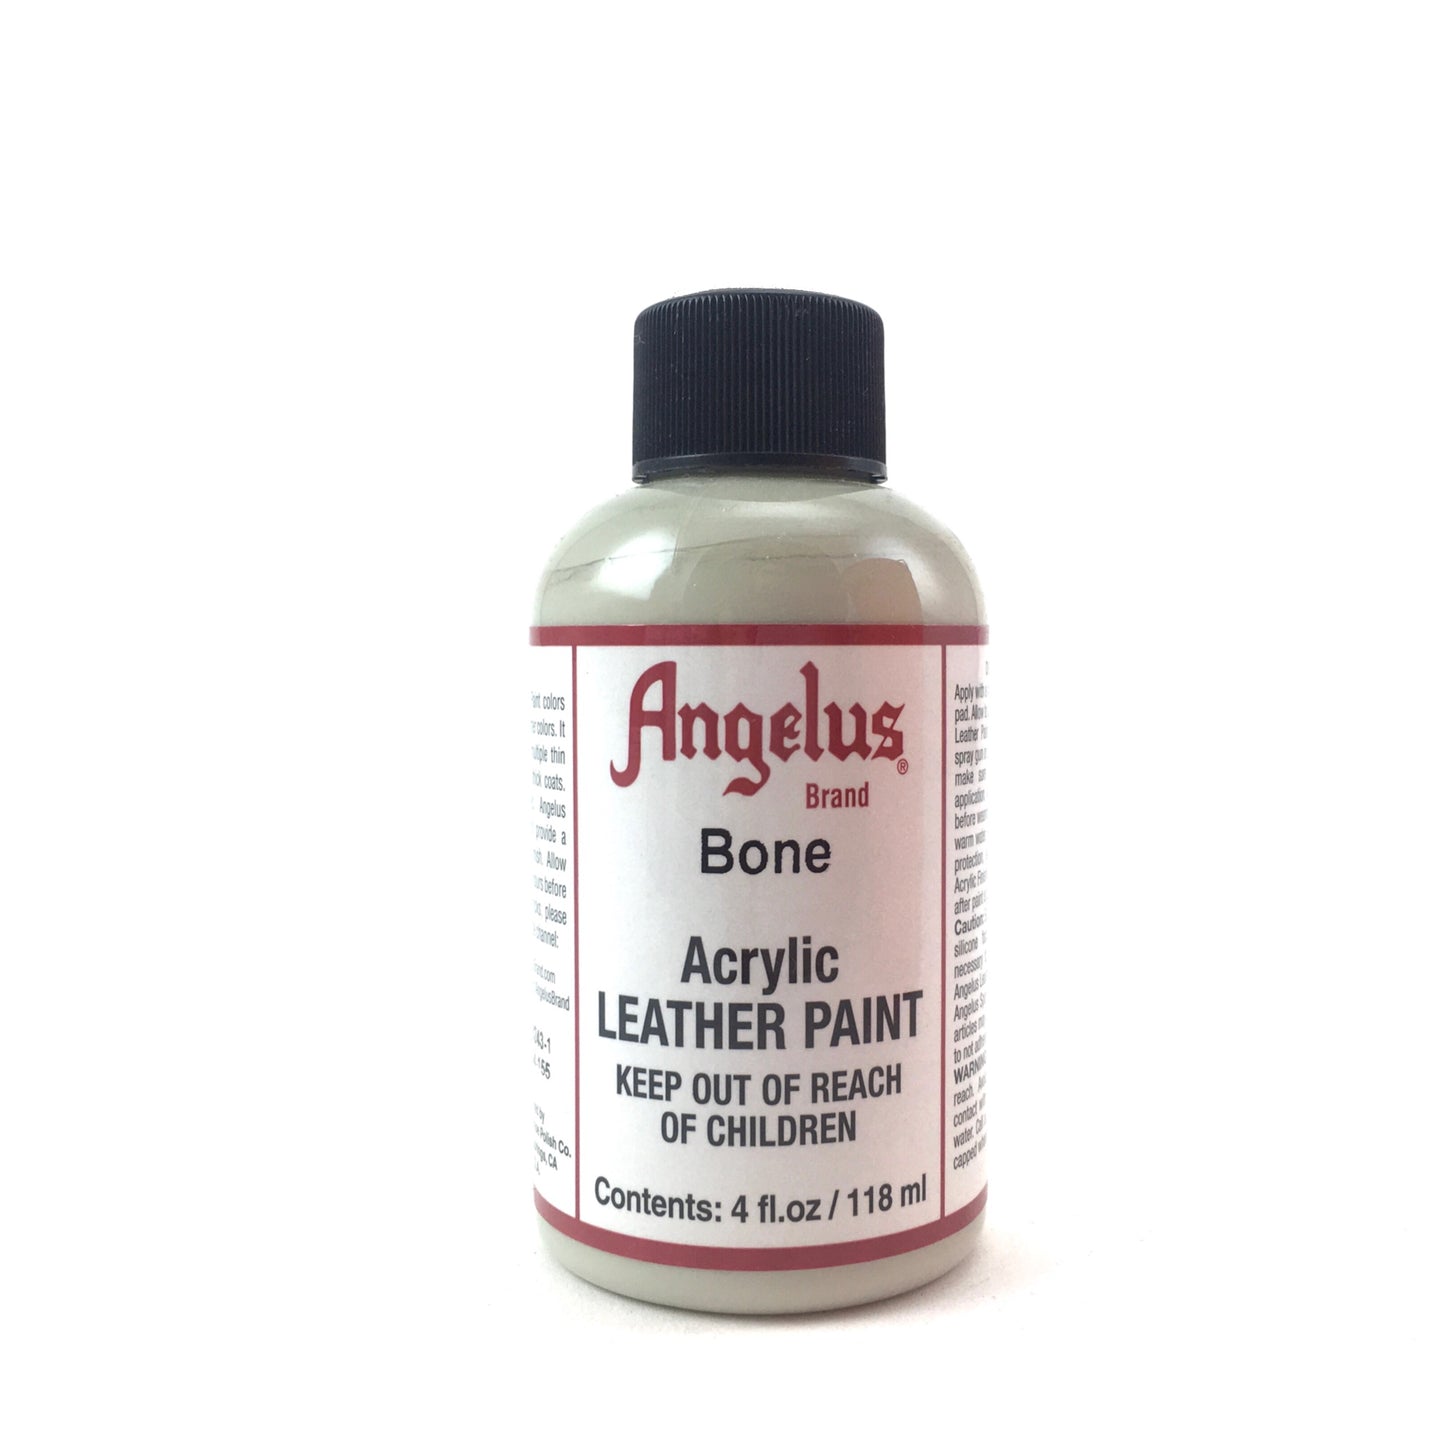 Angelus Acrylic Leather Paint - 4 oz. - by Angelus - K. A. Artist Shop